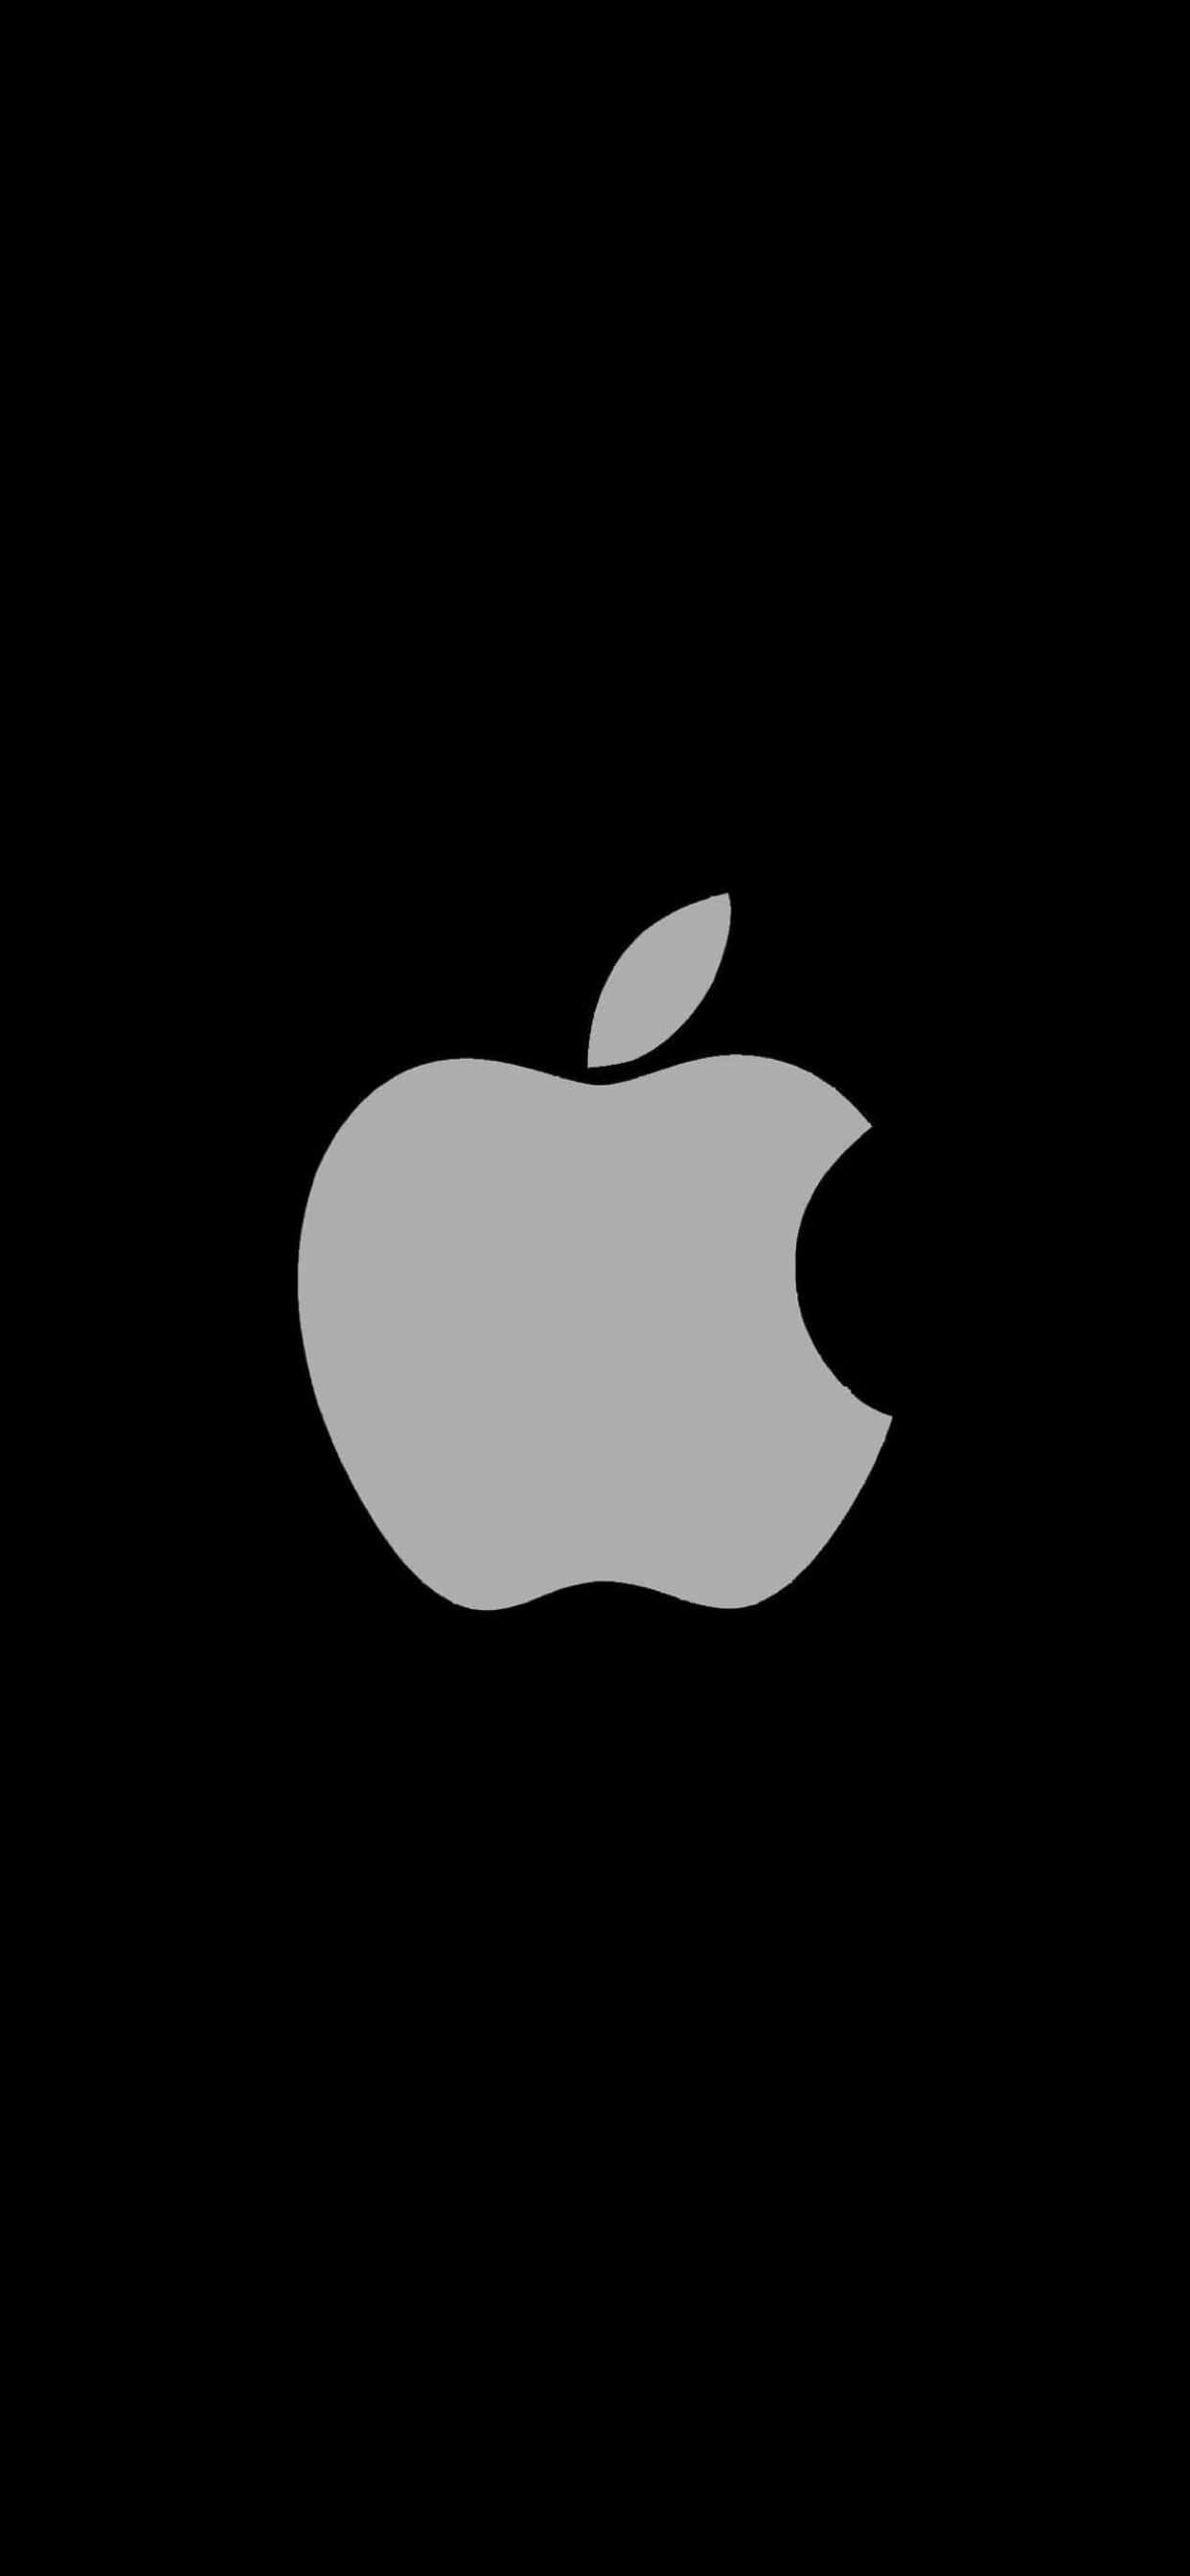 Apple logo black cool wallpaper.sc iPhone XS Max